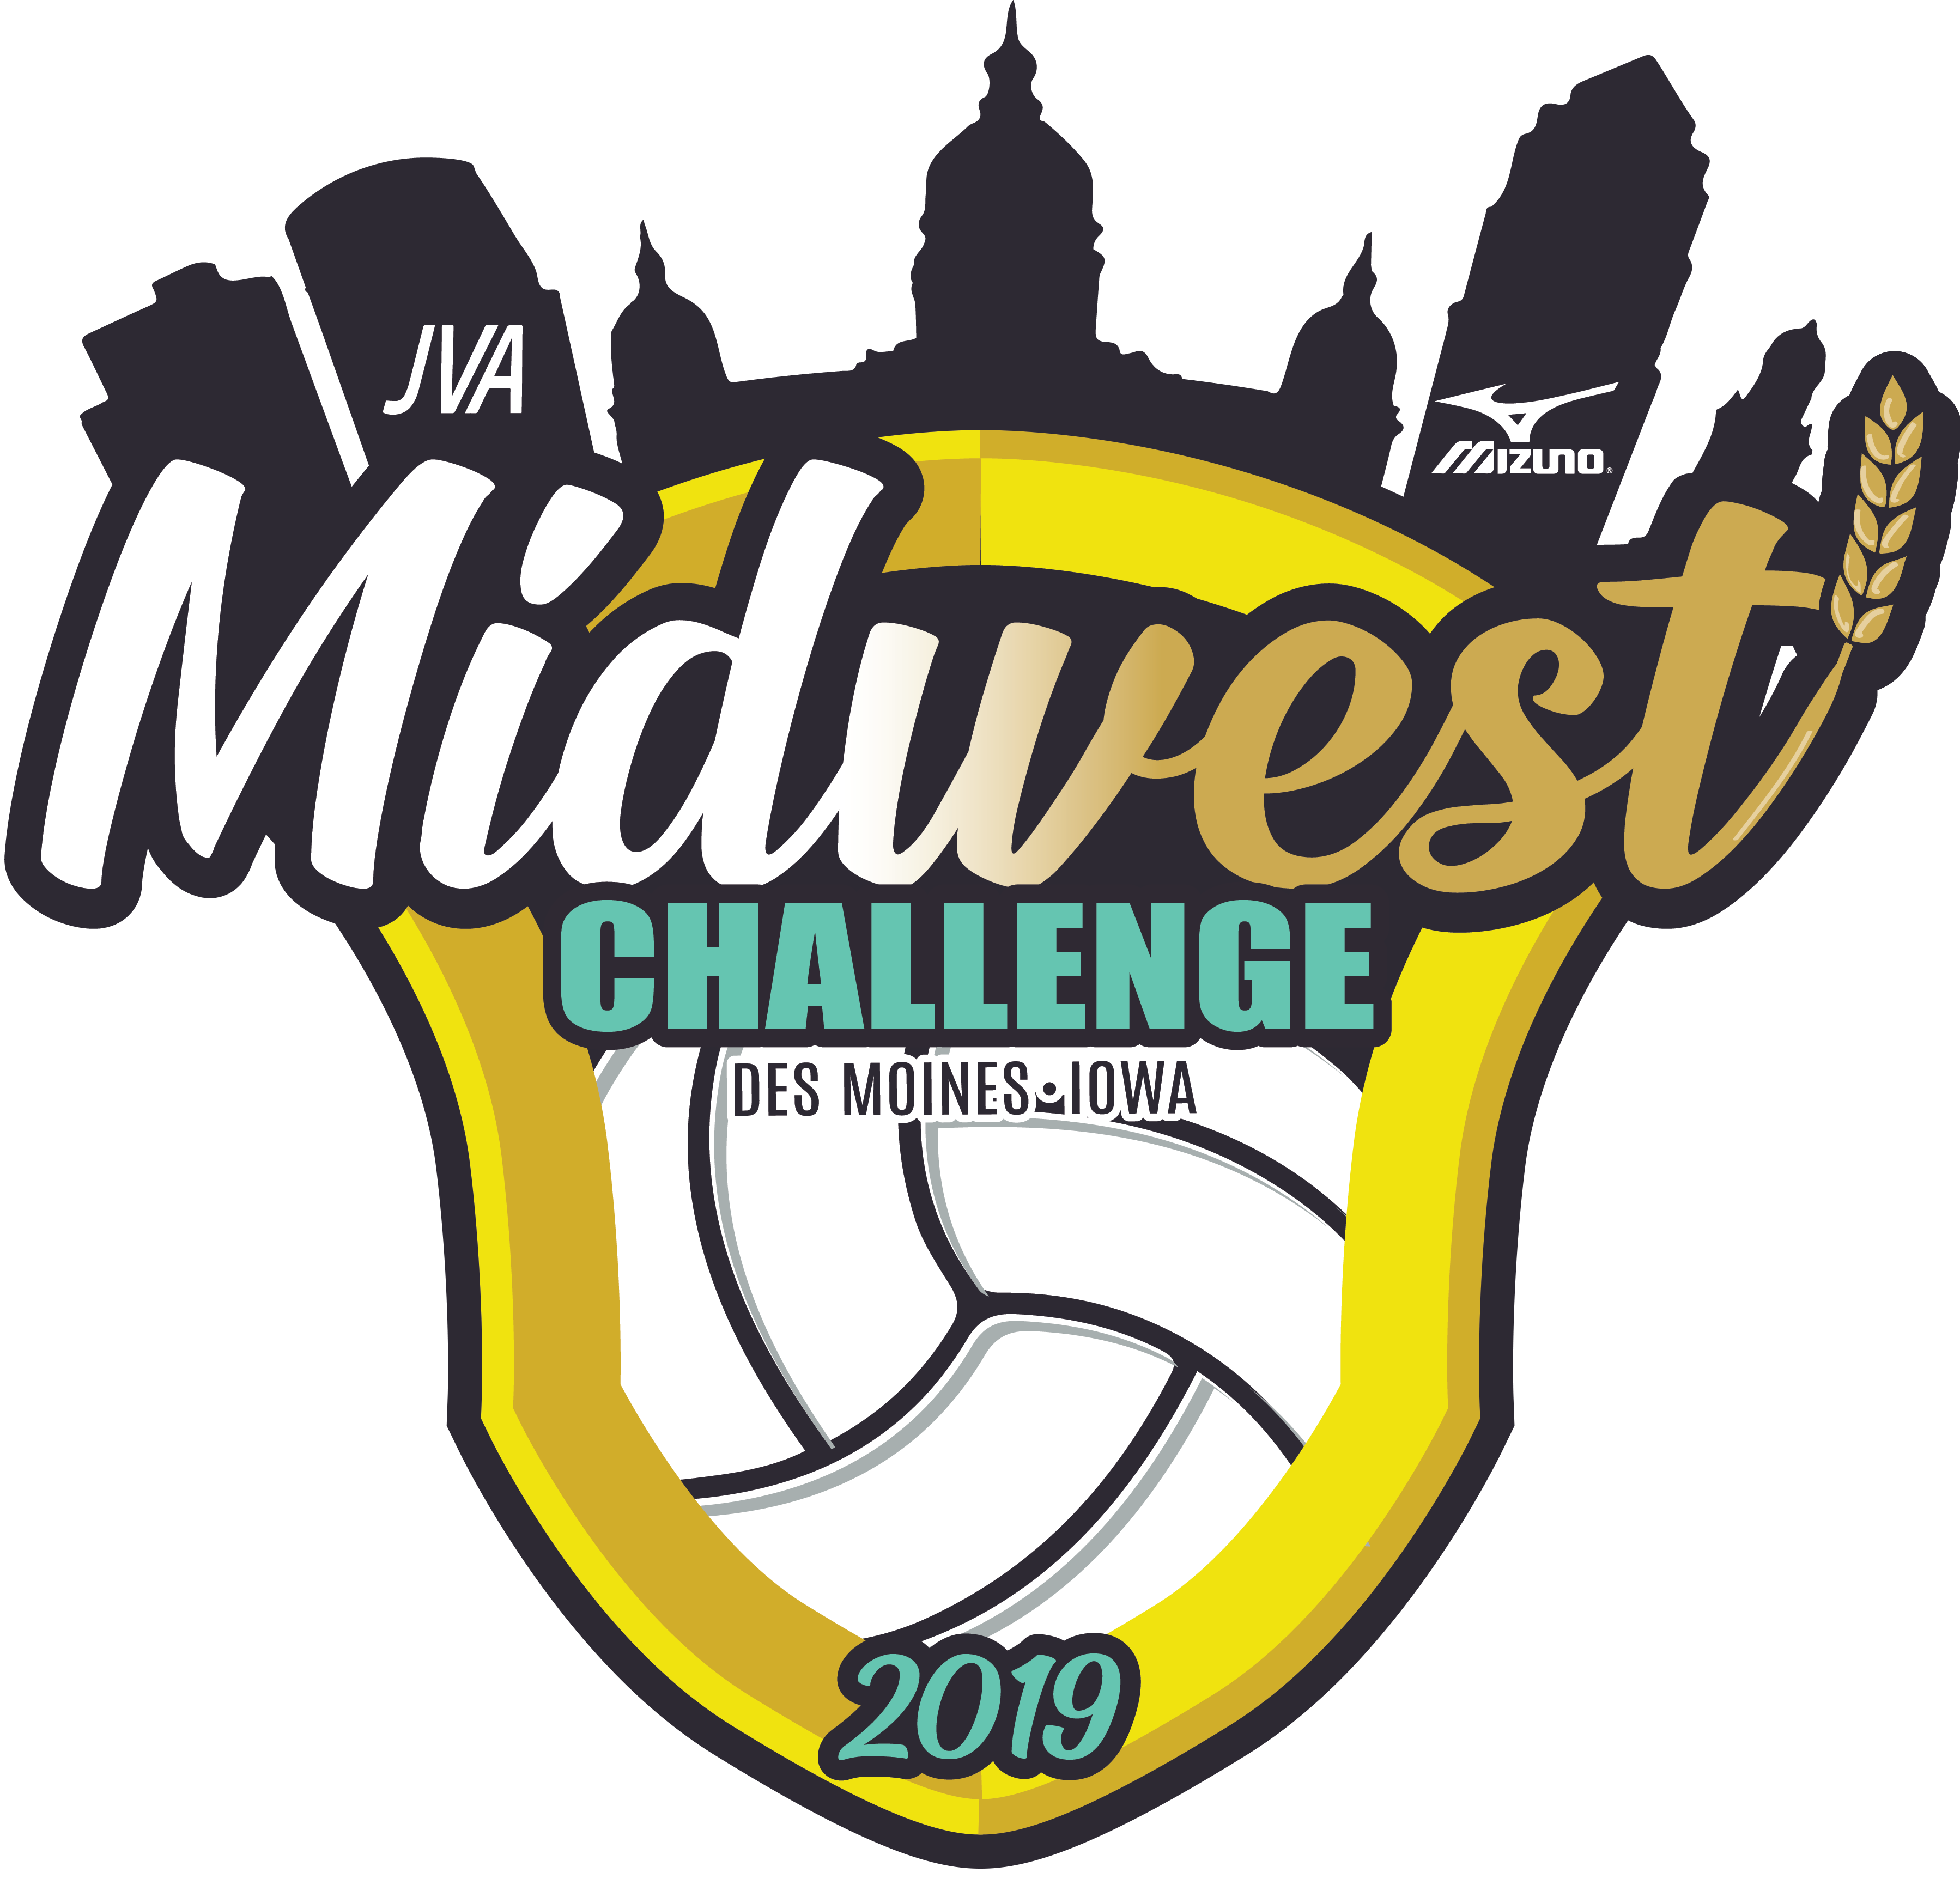 Mizuno Midwest JVA Challenge NetLynx Sports, Inc.